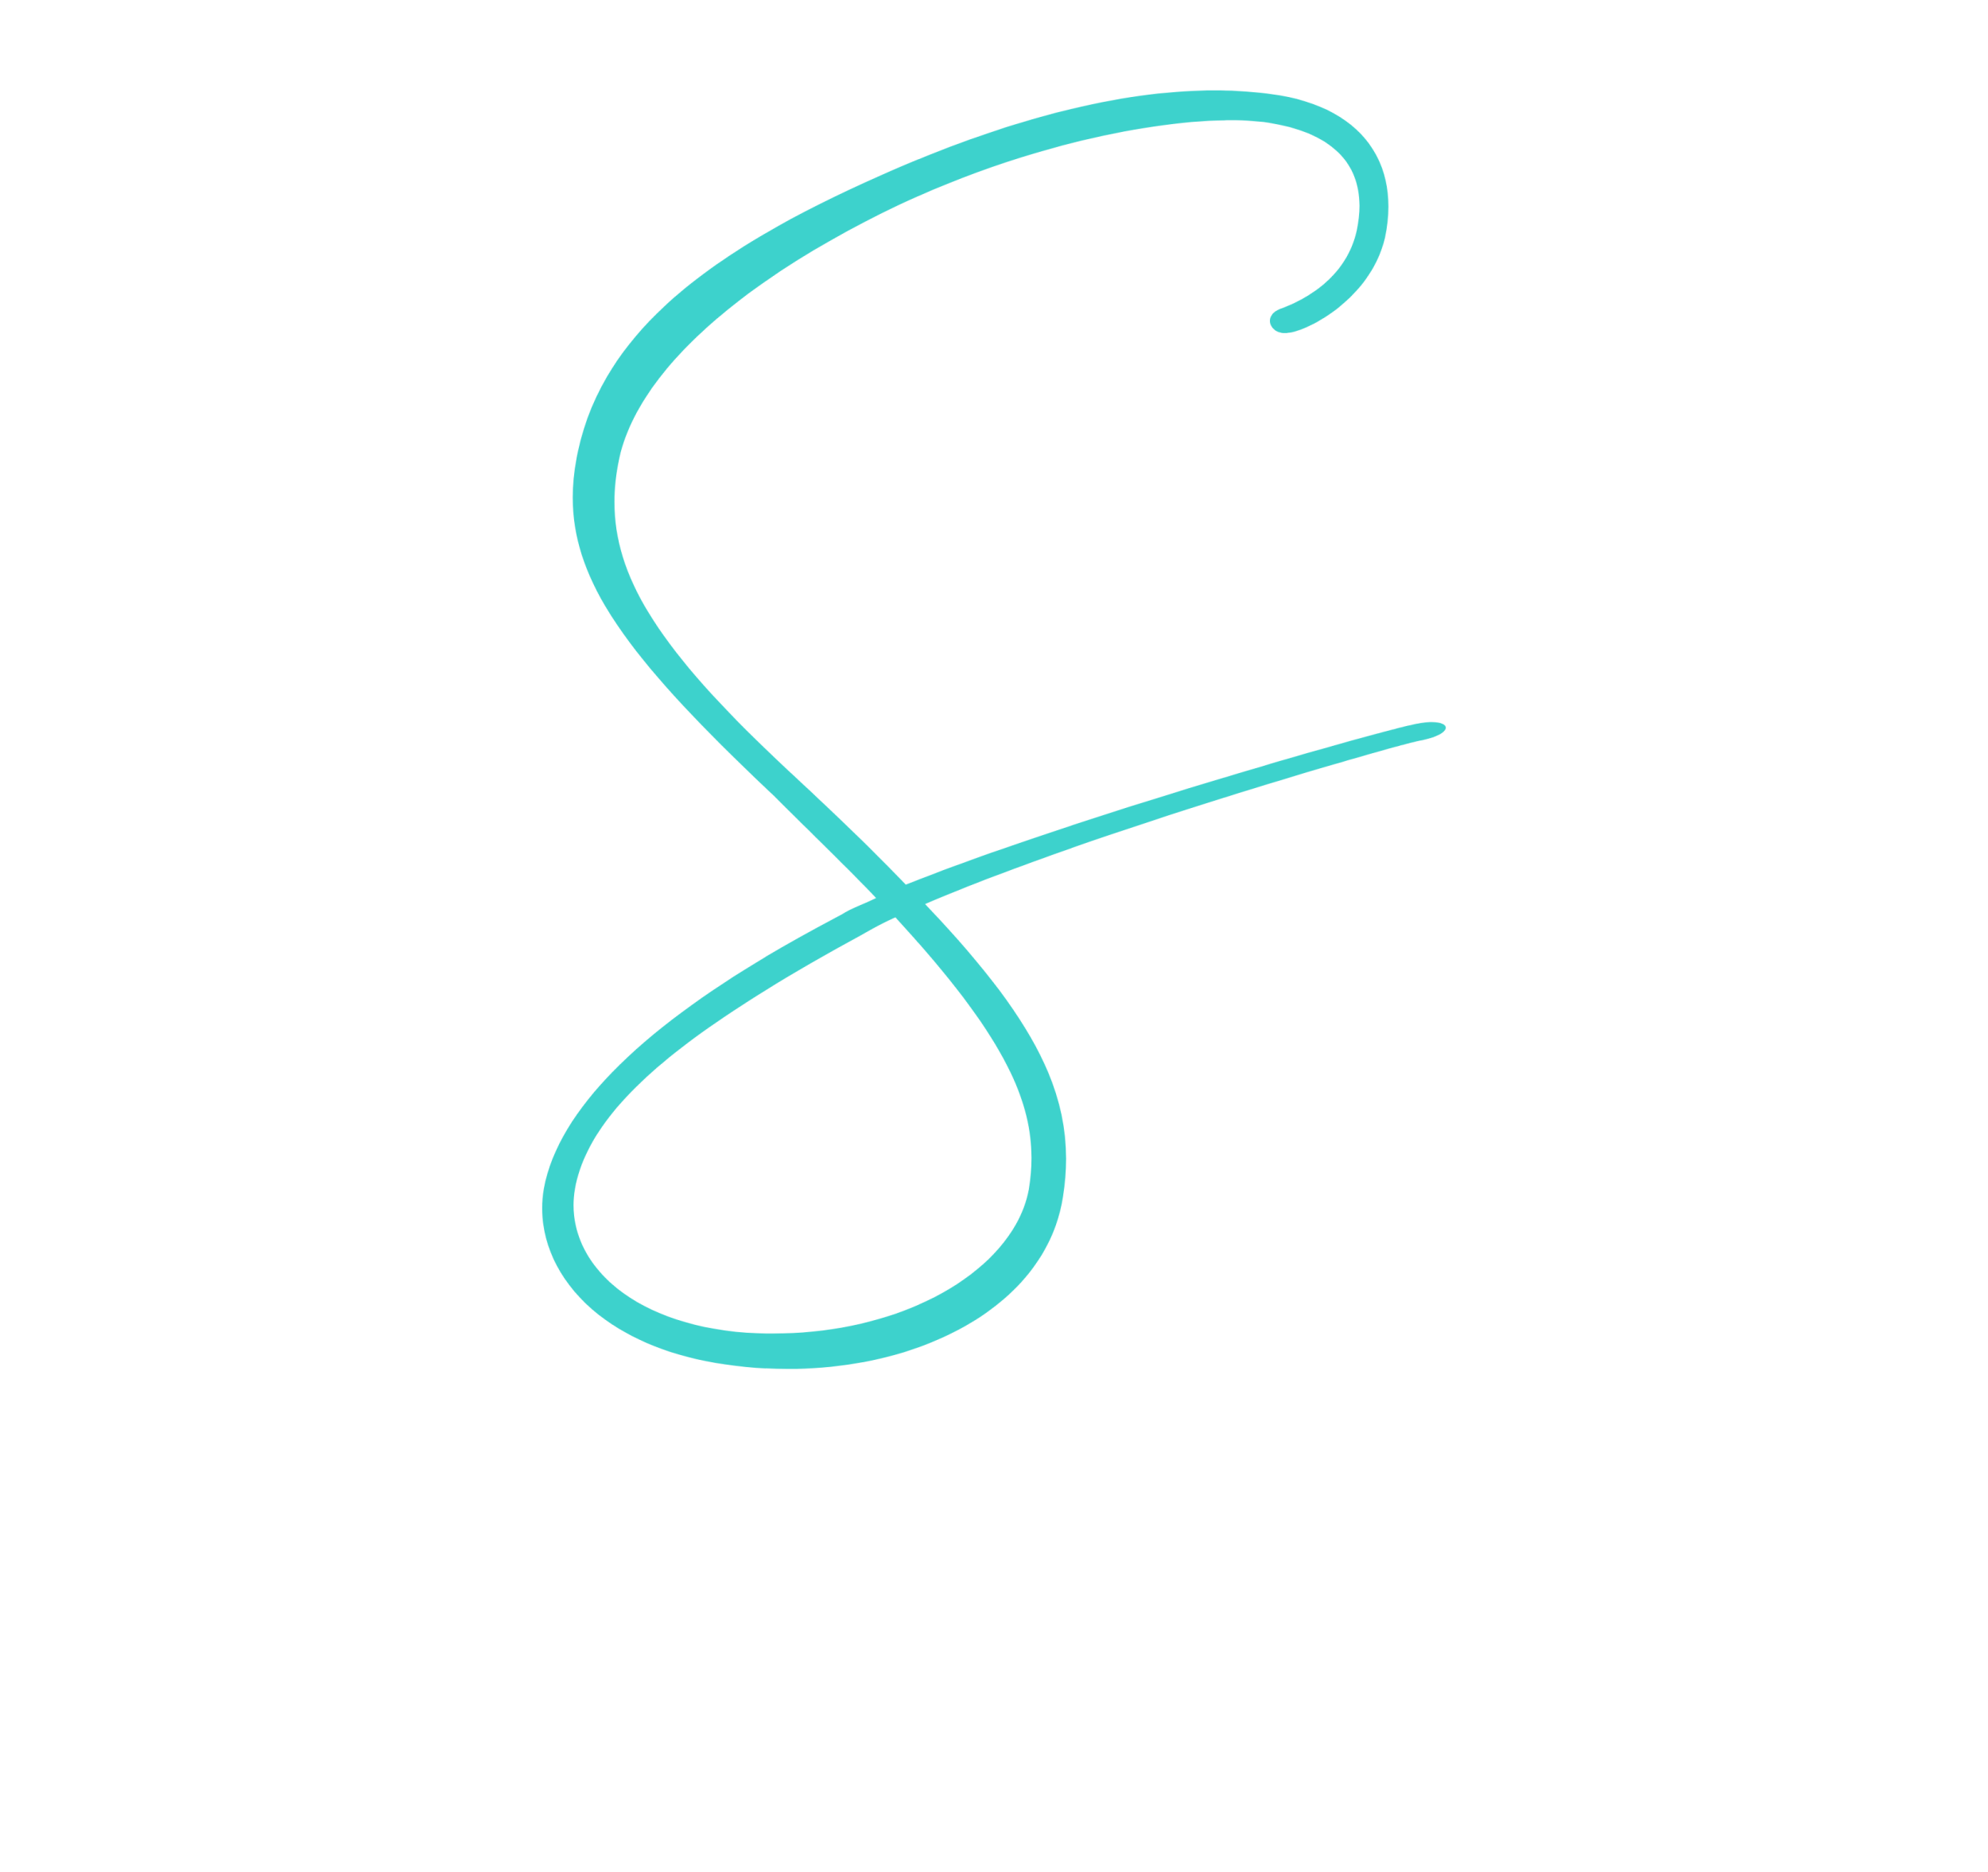 Sparxus logo